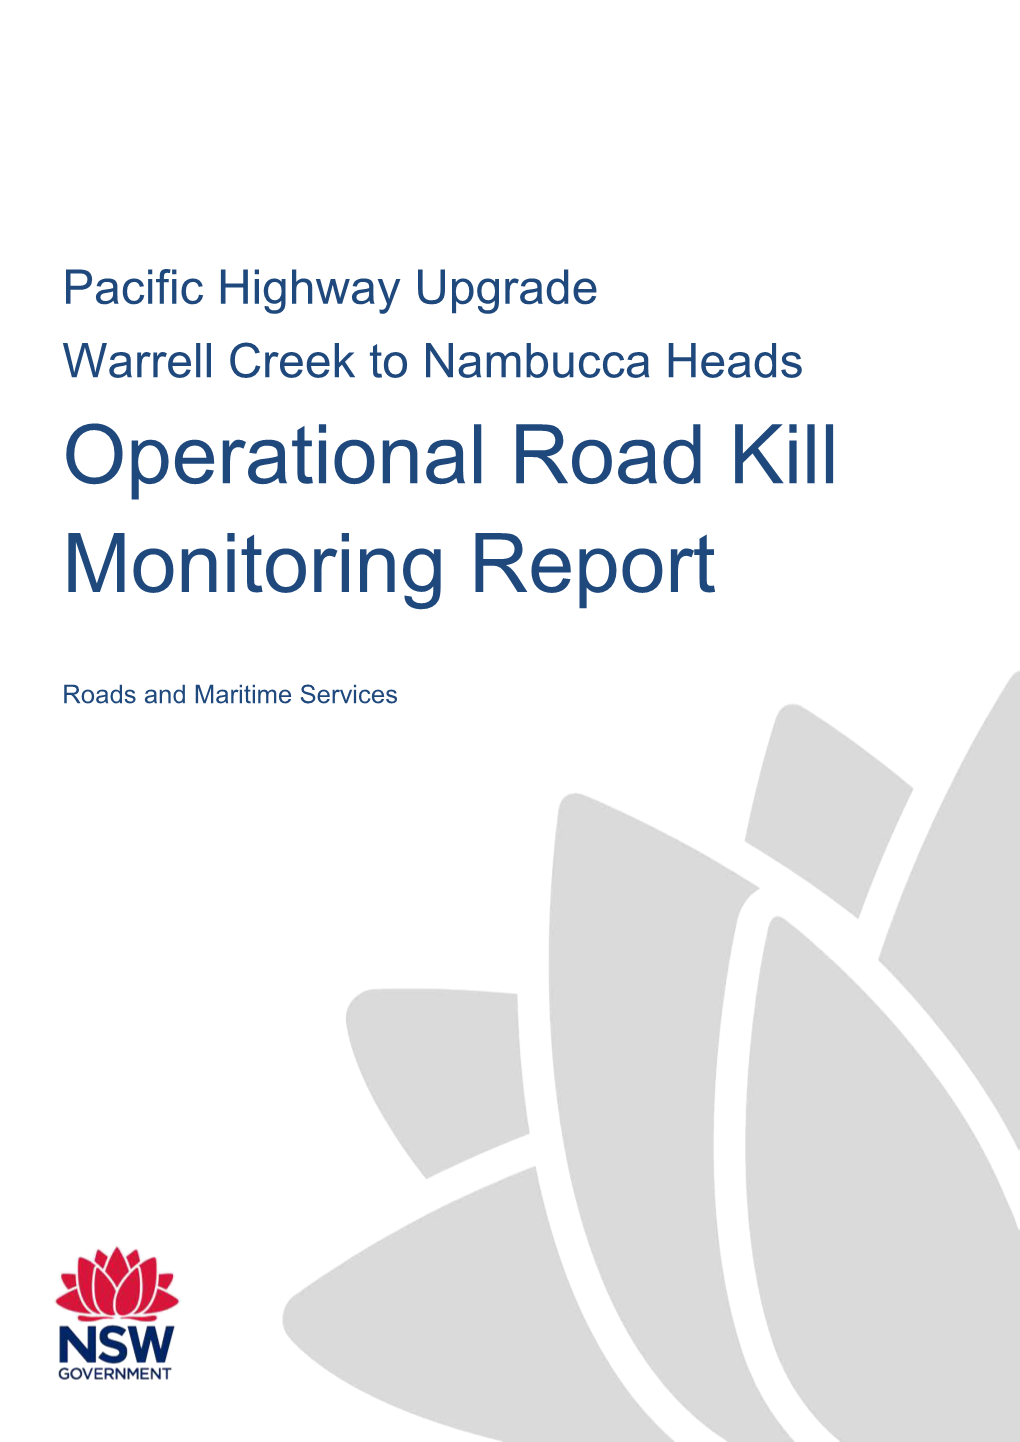 Operational Road Kill Monitoring Report